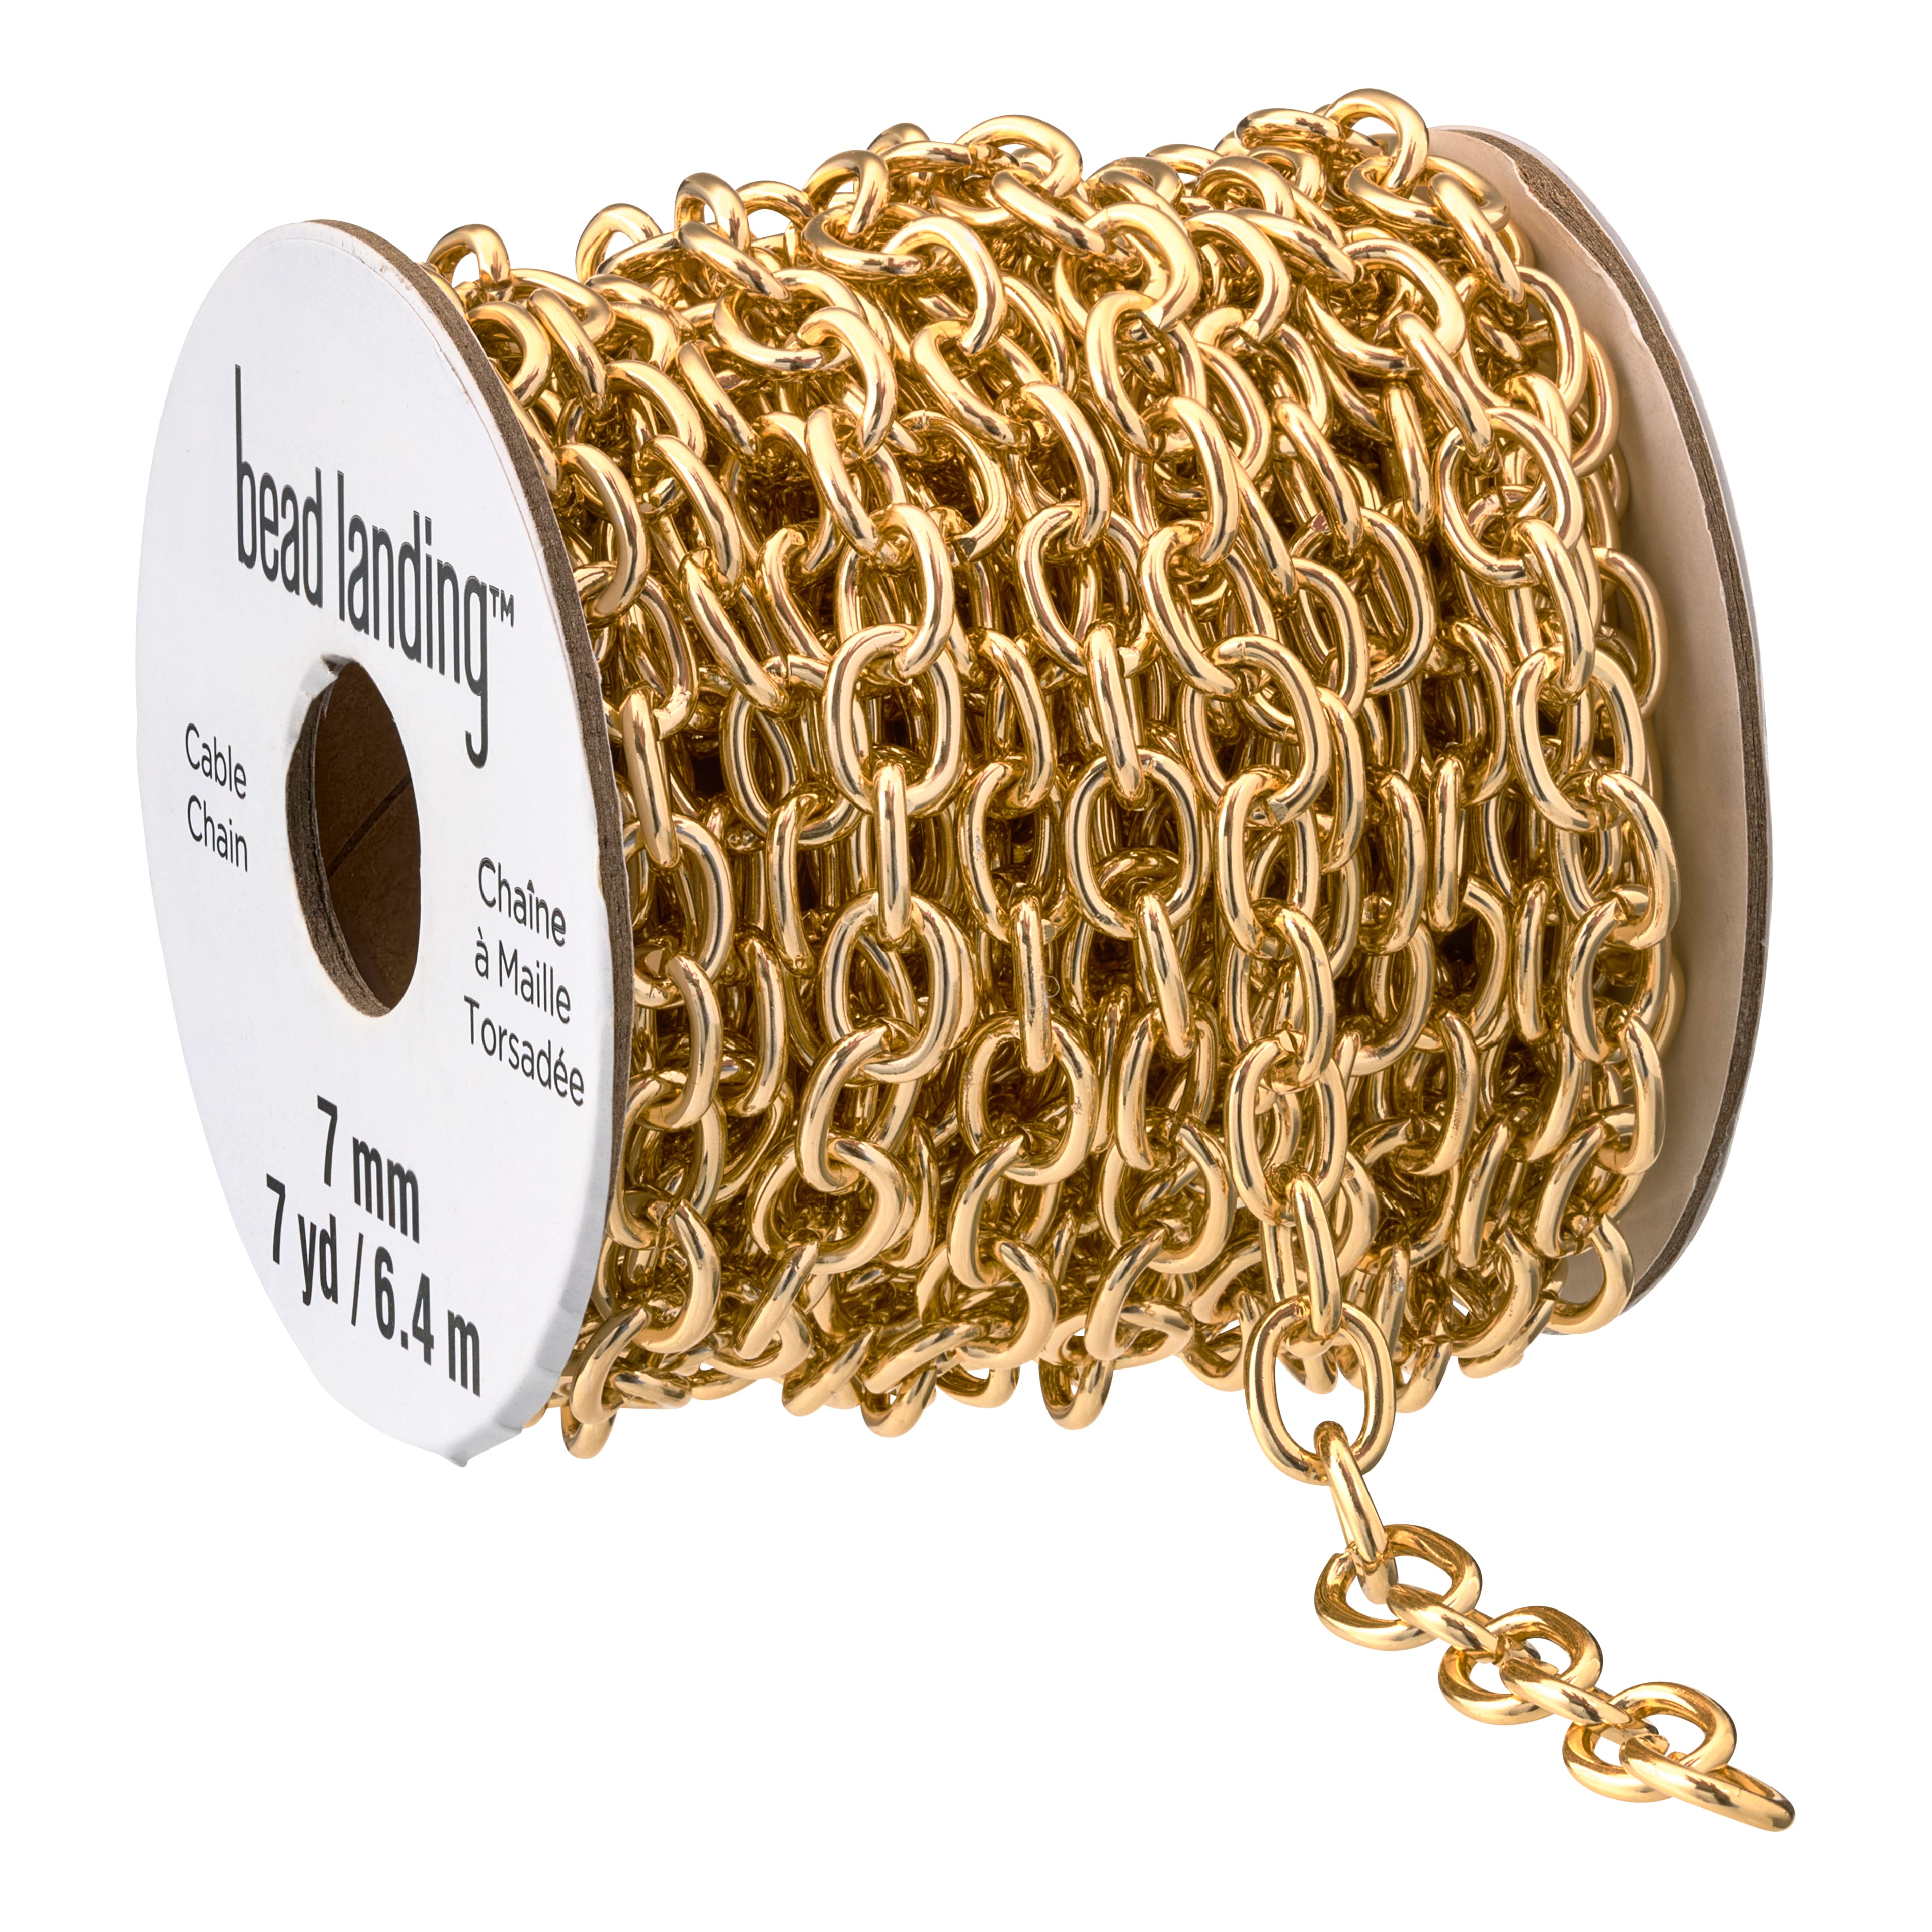 Bead Landing Oxidized Brass Chain Spool - Each